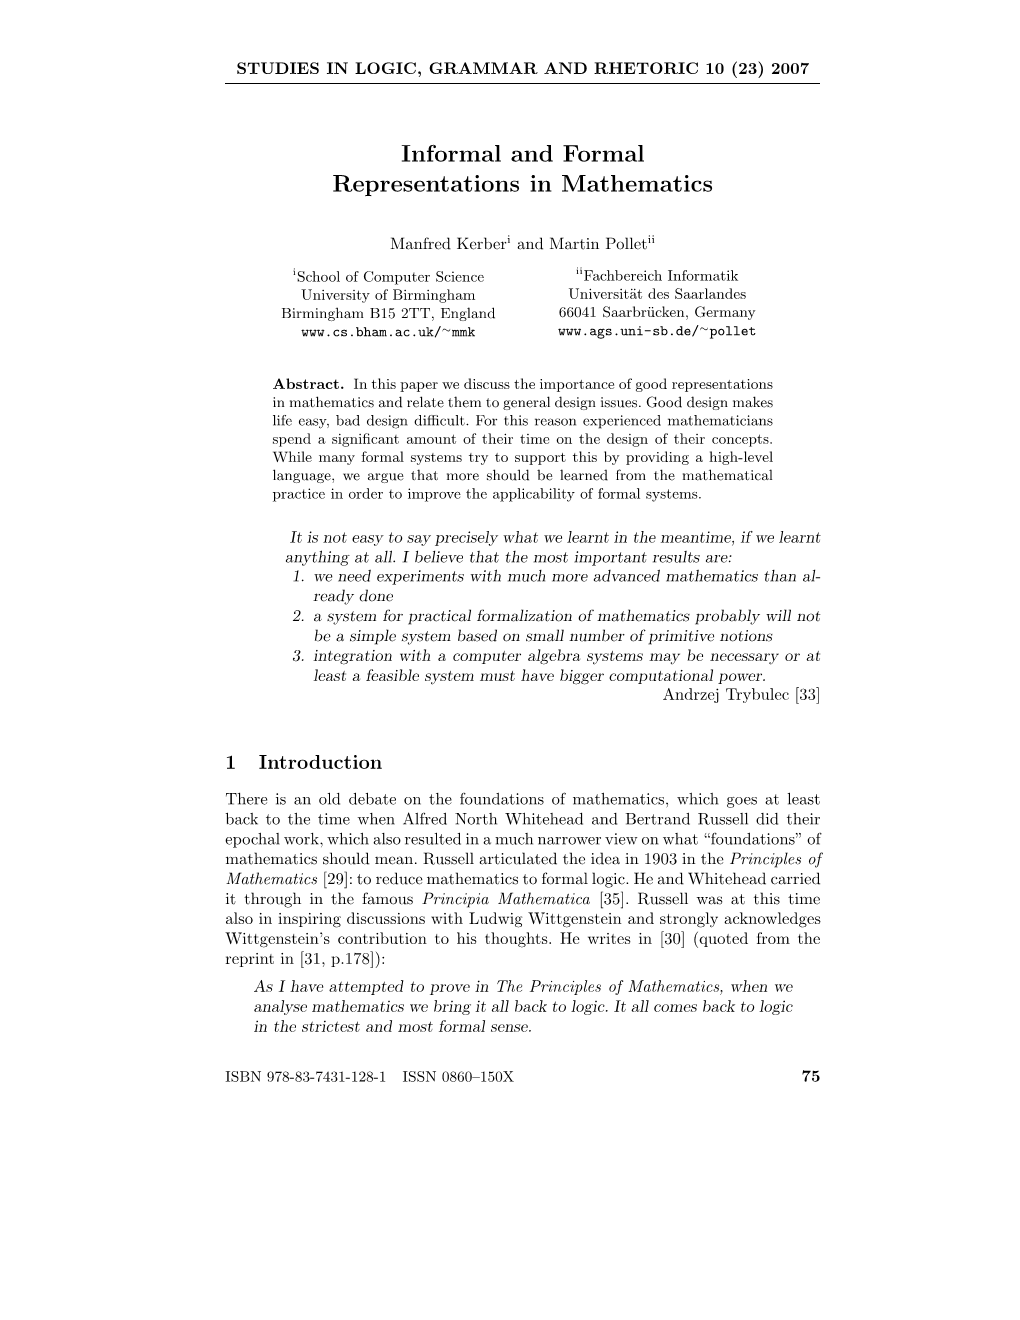 Informal and Formal Representations in Mathematics